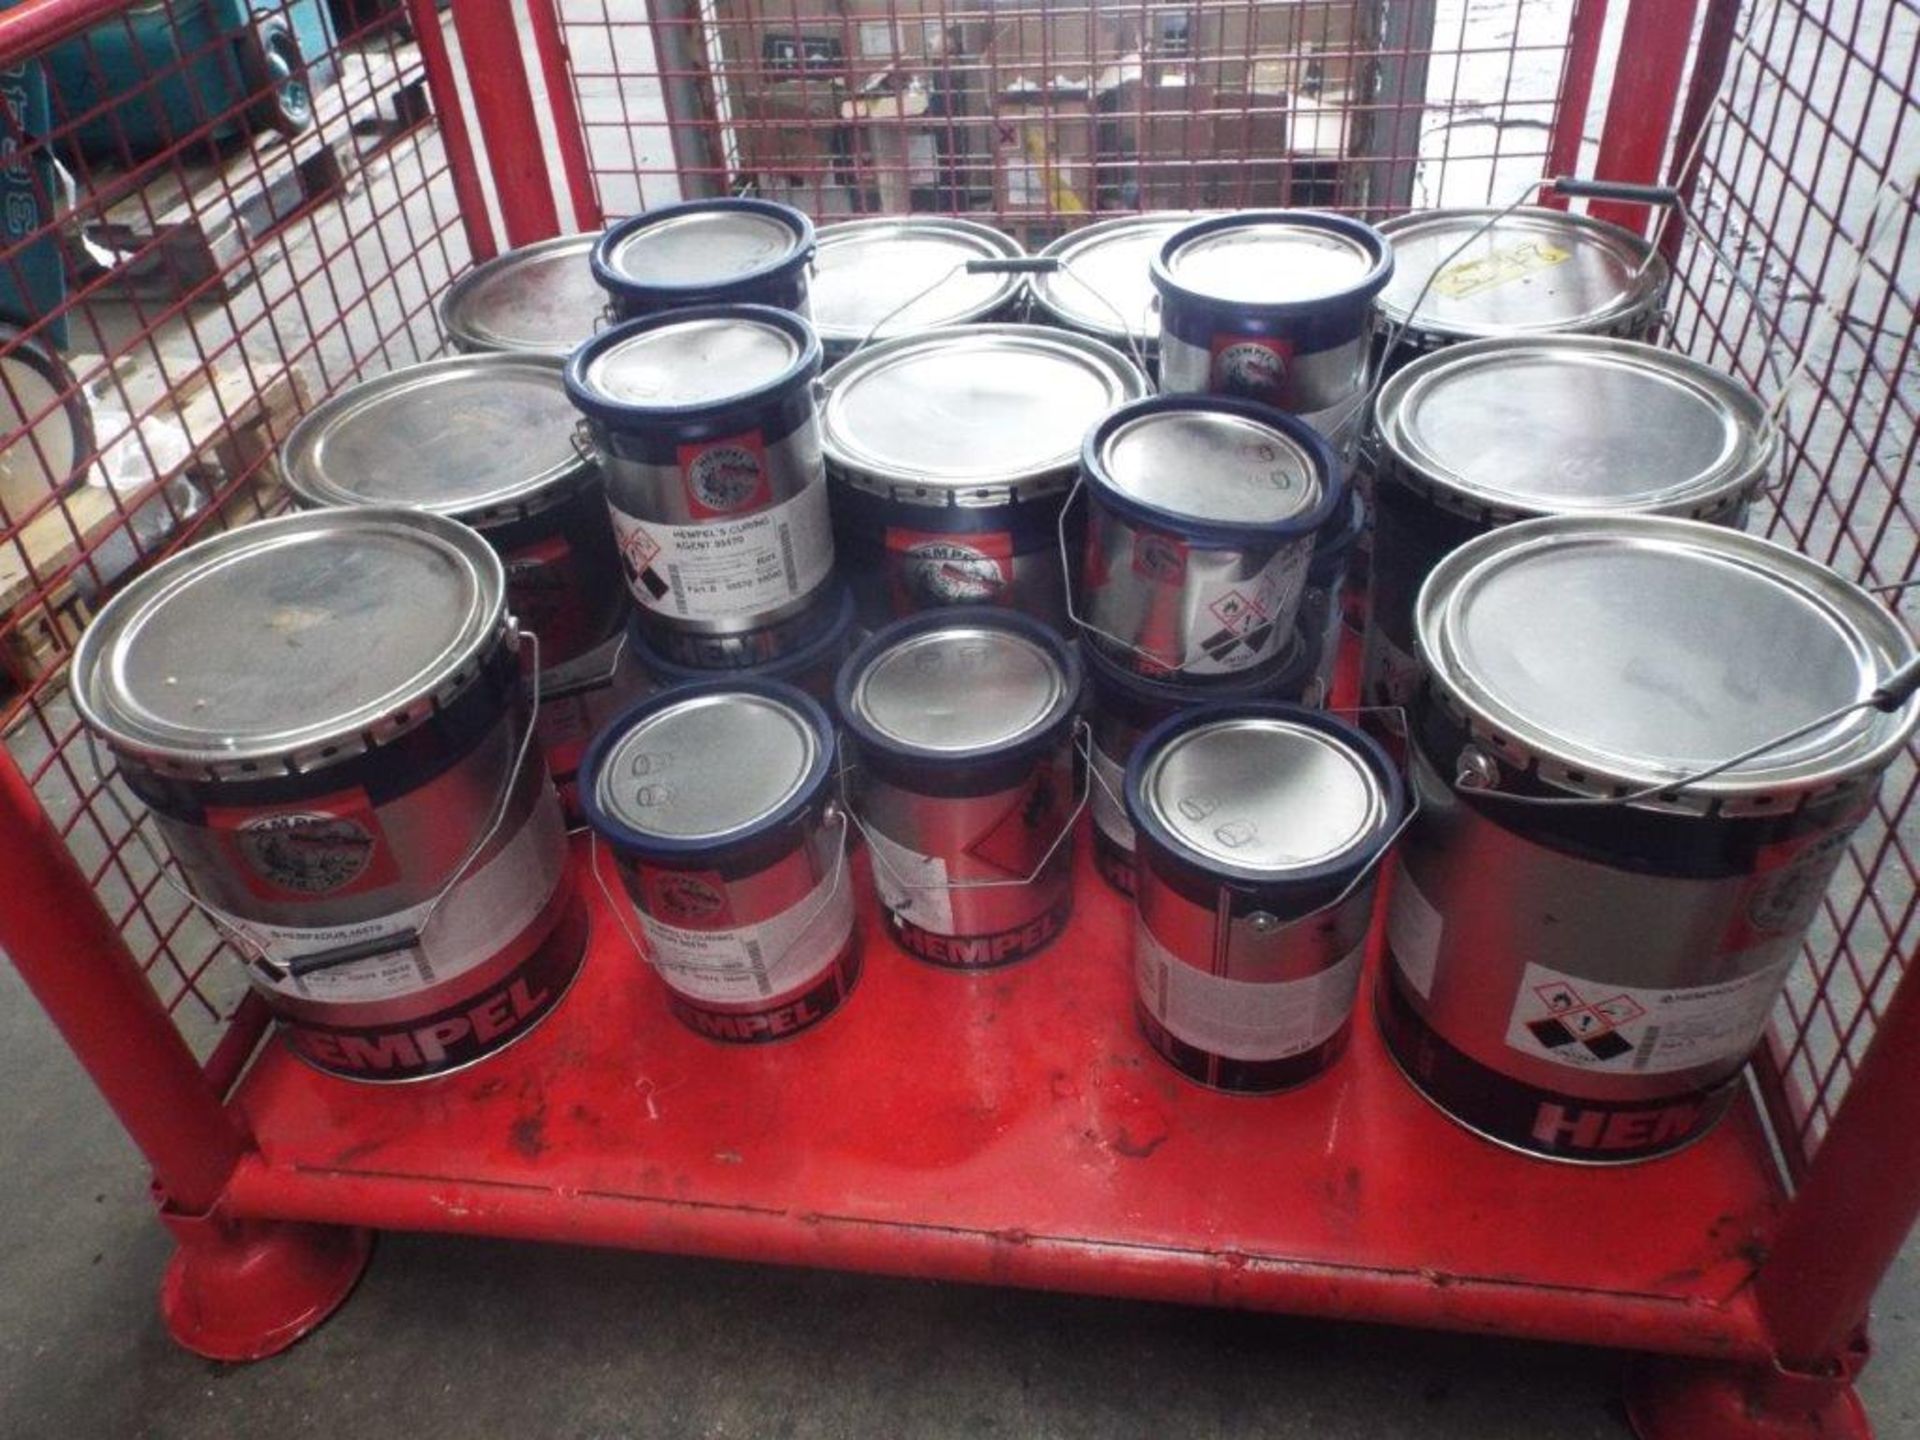 9 x 15/5L Cans of Hempel Hempadur 15570 2-Part Epoxy Paint - Red + 1 x 3.75/1.25L Reddish Grey